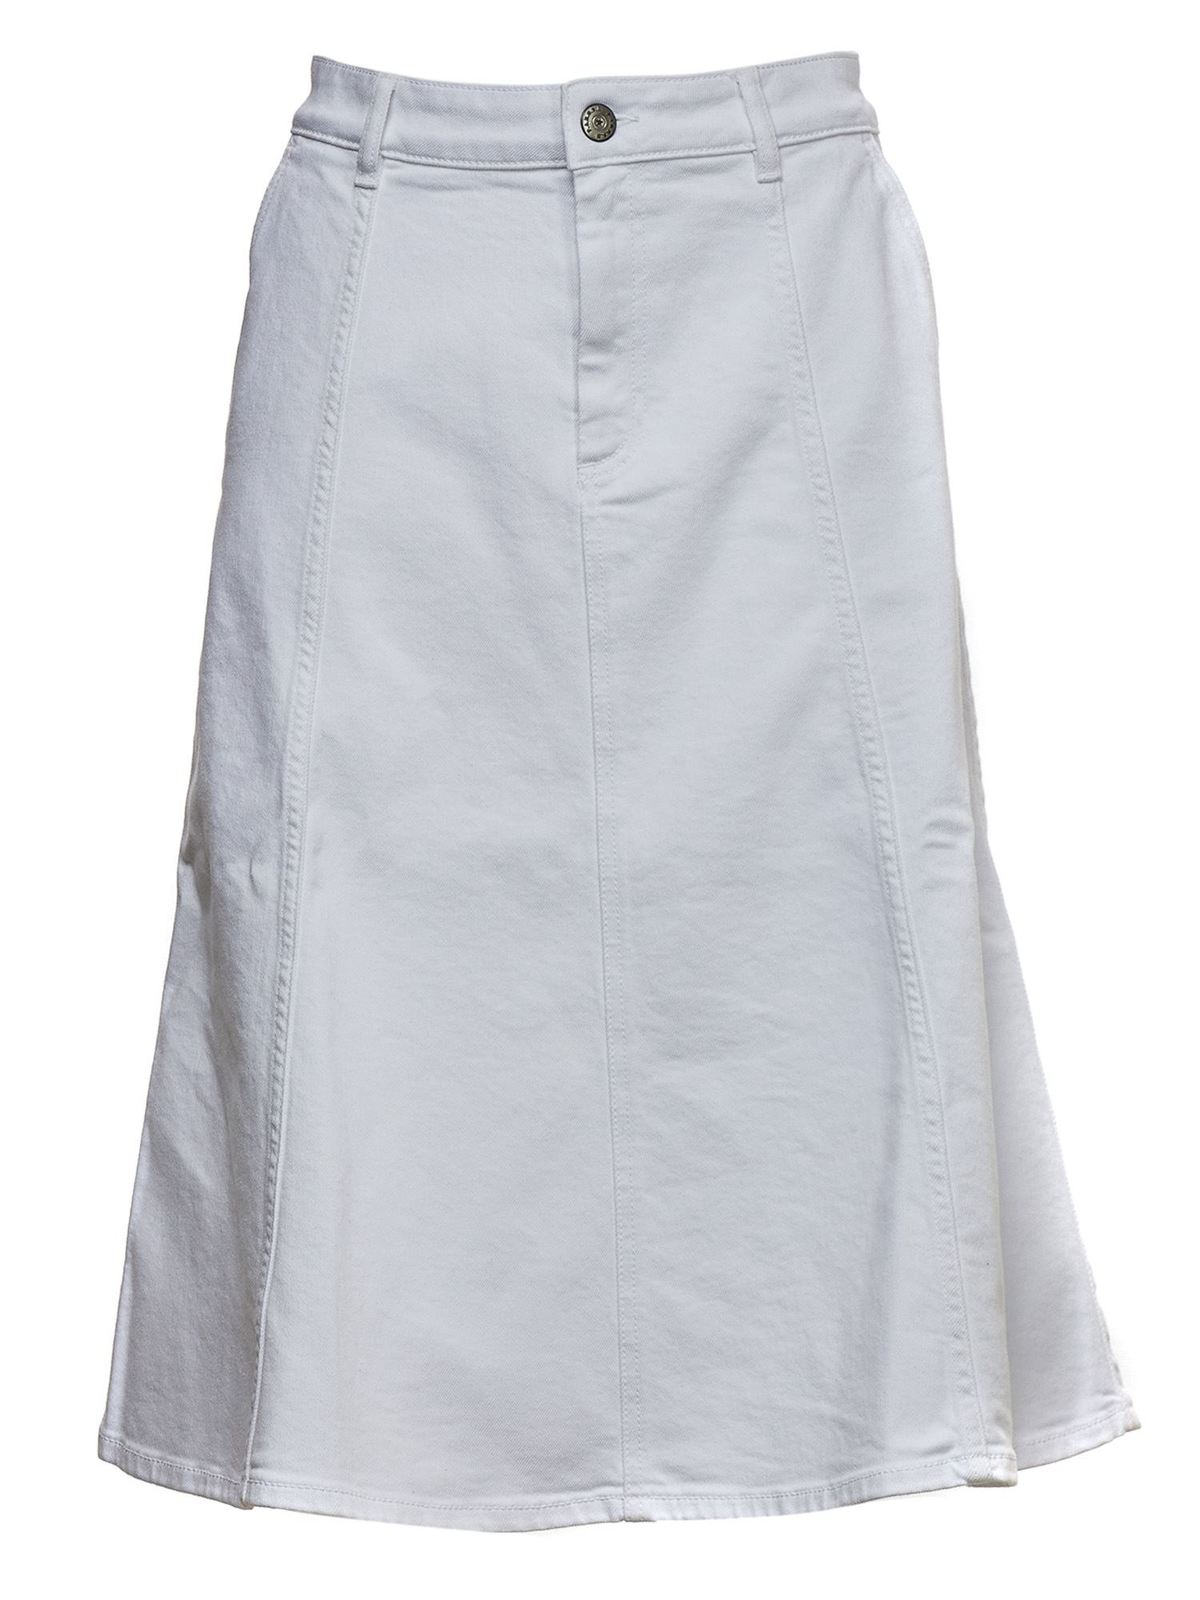 White Stretchy Distressed Denim Skirt – Skirted Fancy